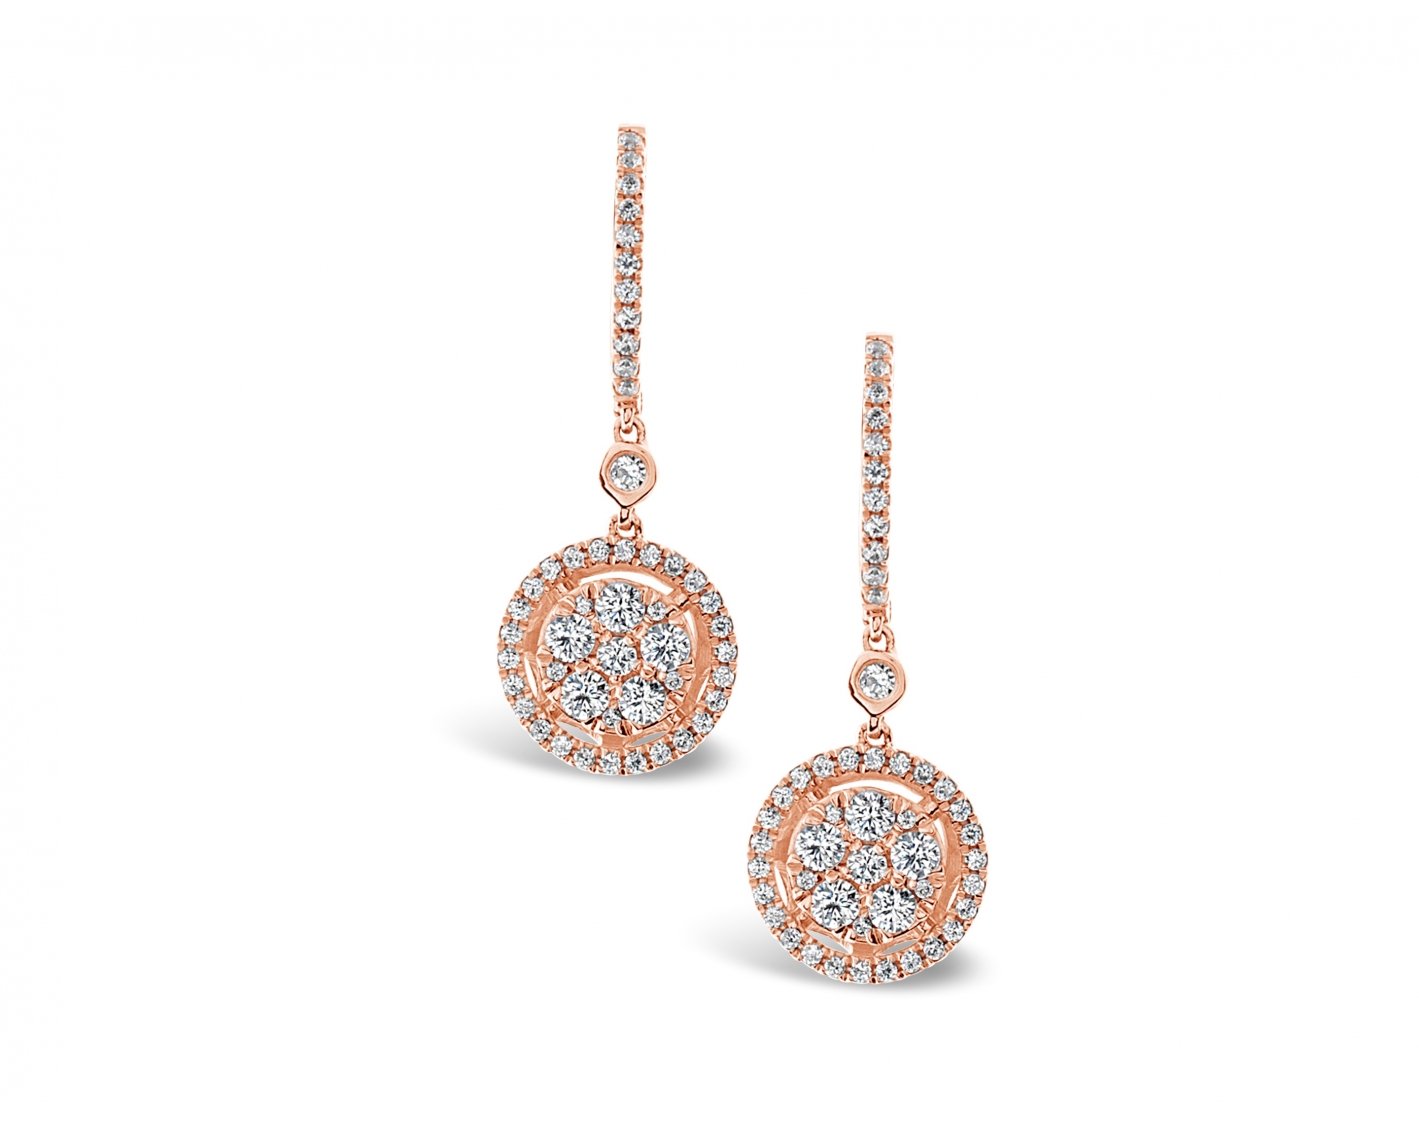 18k white gold halo illusion set diamond earrings with upstones Photos & images